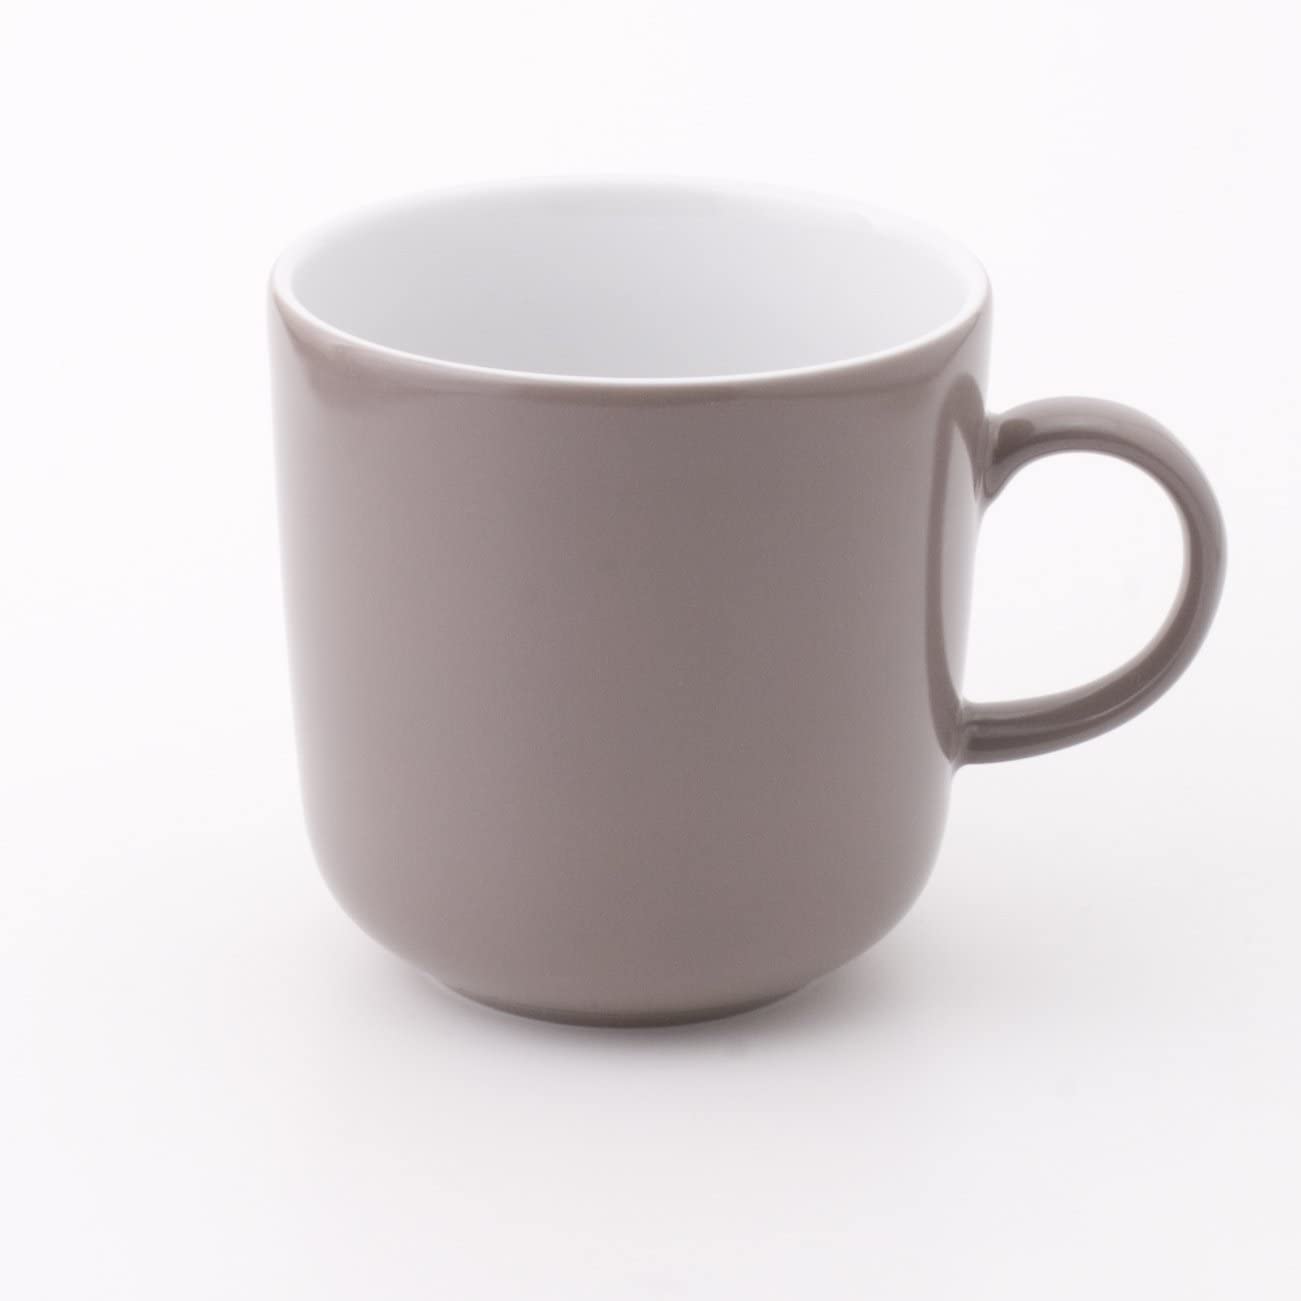 KAHLA 8.07-inch Pronto Coffee Cup Coffee Mug Coffee Cup in Original Box